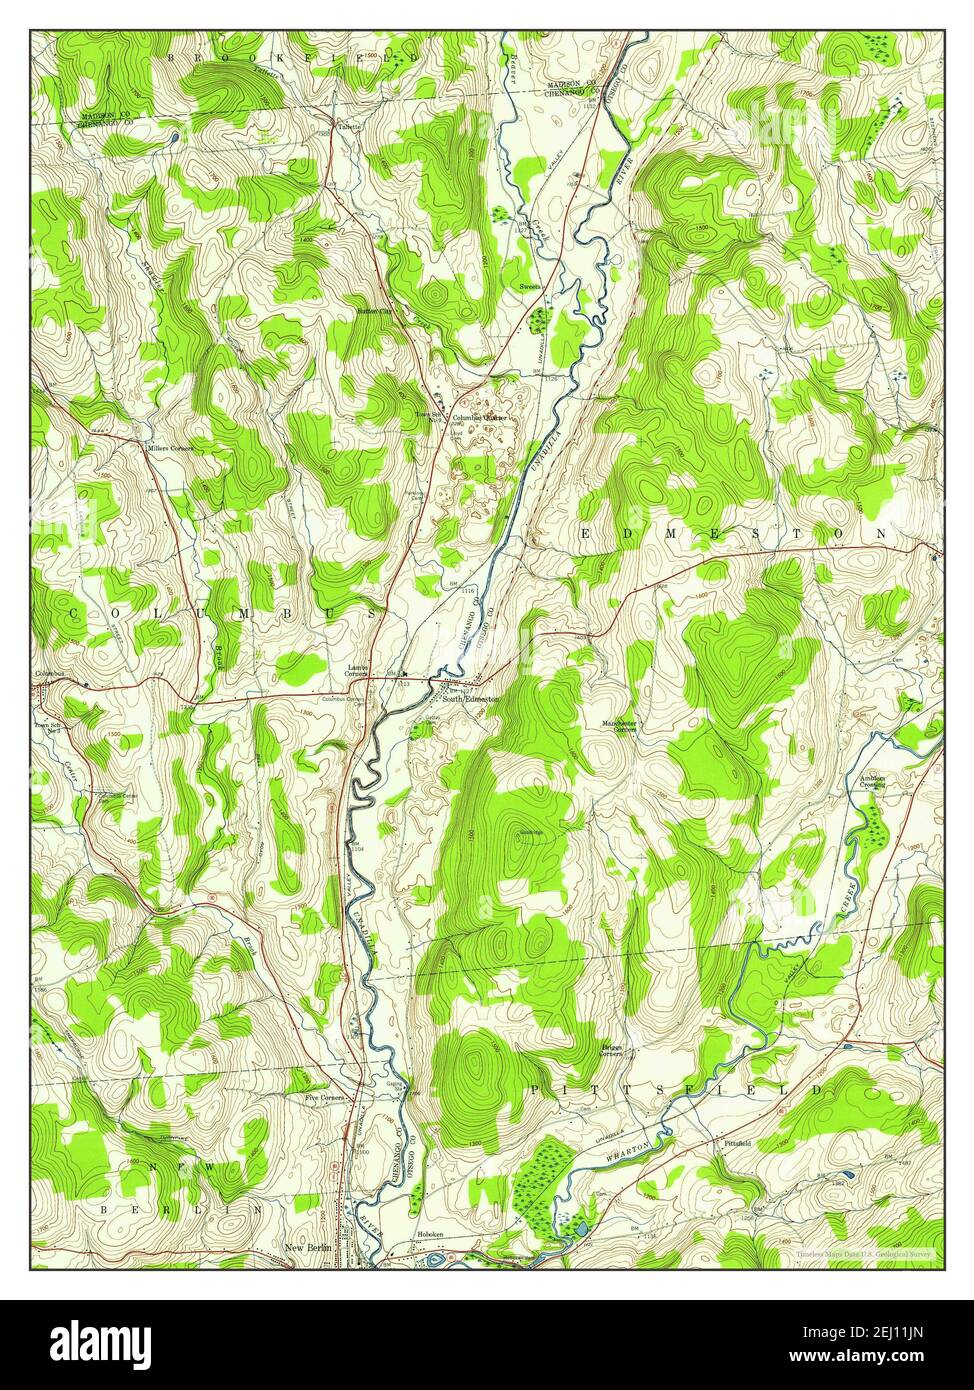 Portageville NY Quadrangle 1943 Topographical Map 